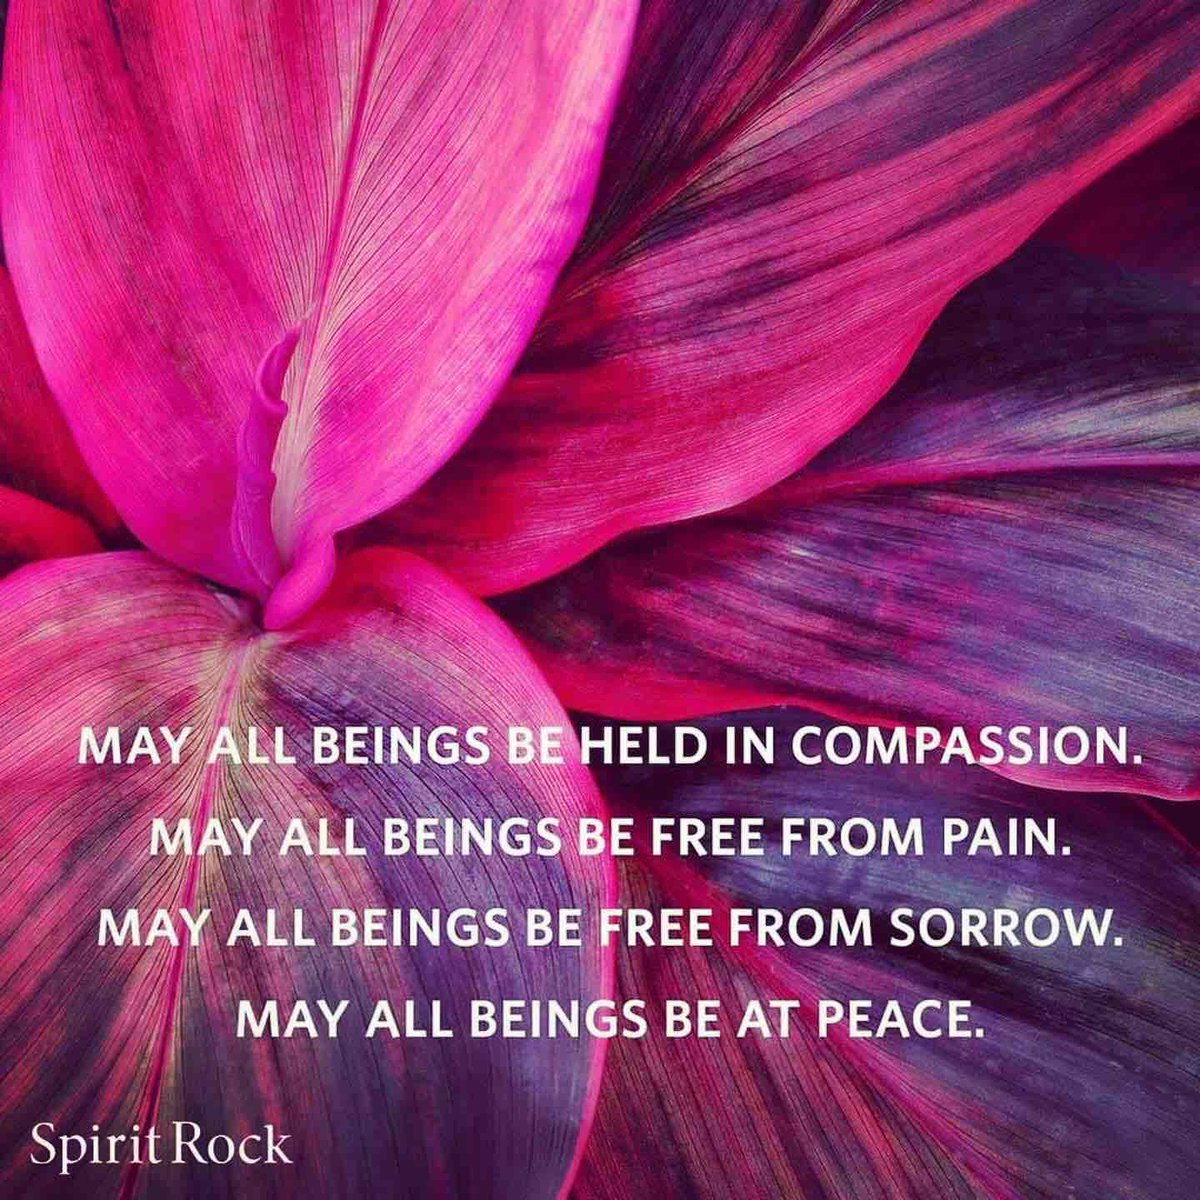 Sending some #mondaymetta your way today and every day. #mindfulness #lovingkindness #compassion #metta #spiritrockmeditationcenter #spiritrock